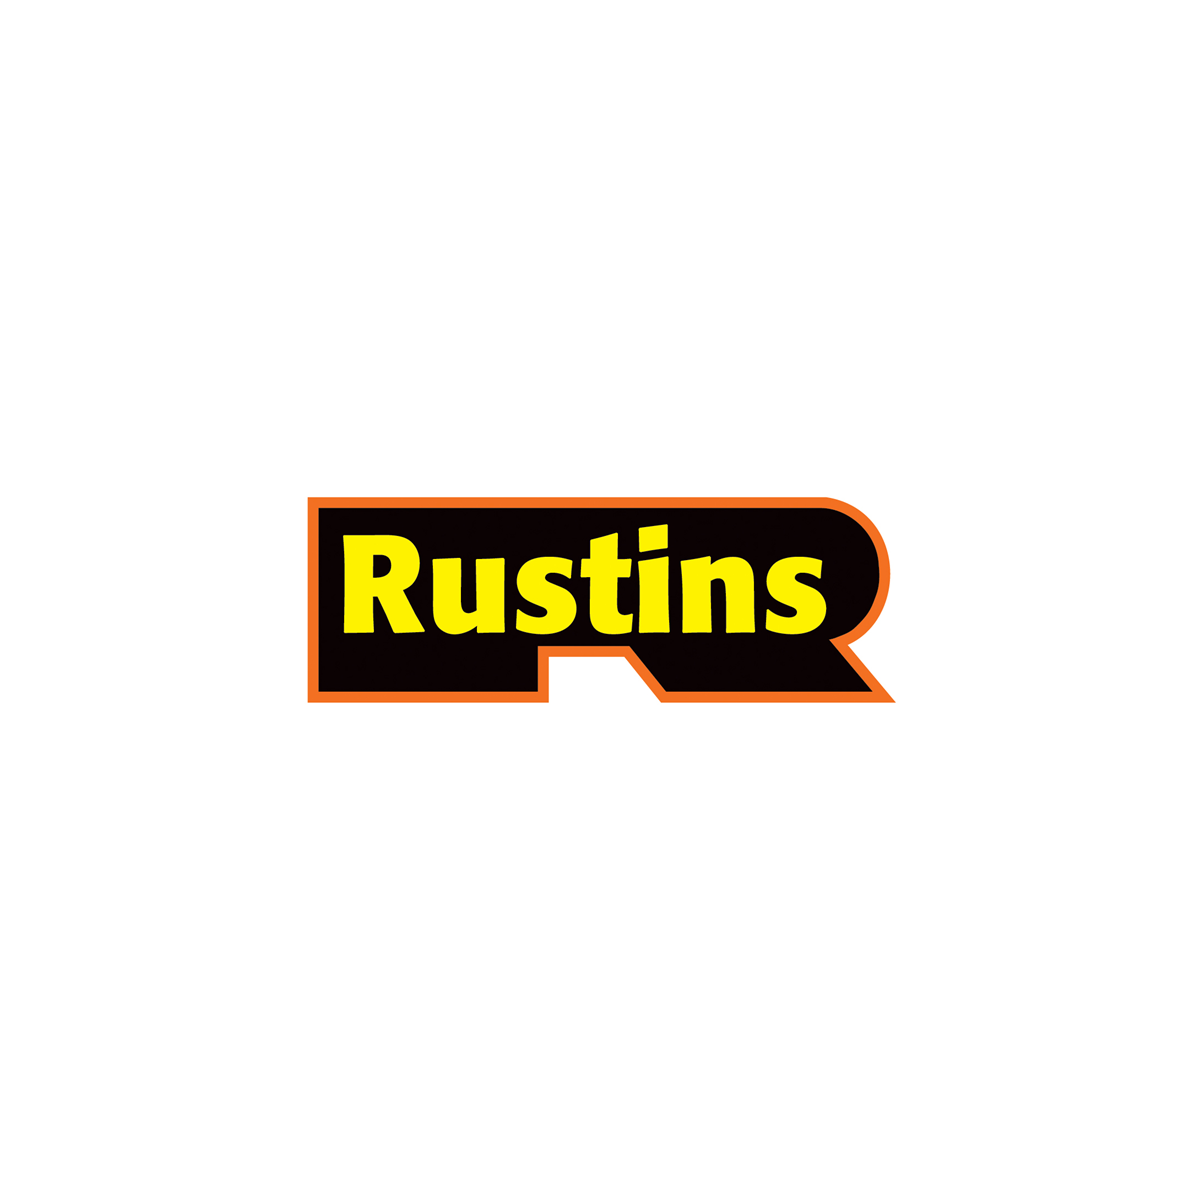 Where to buy Rustins Varnish Online